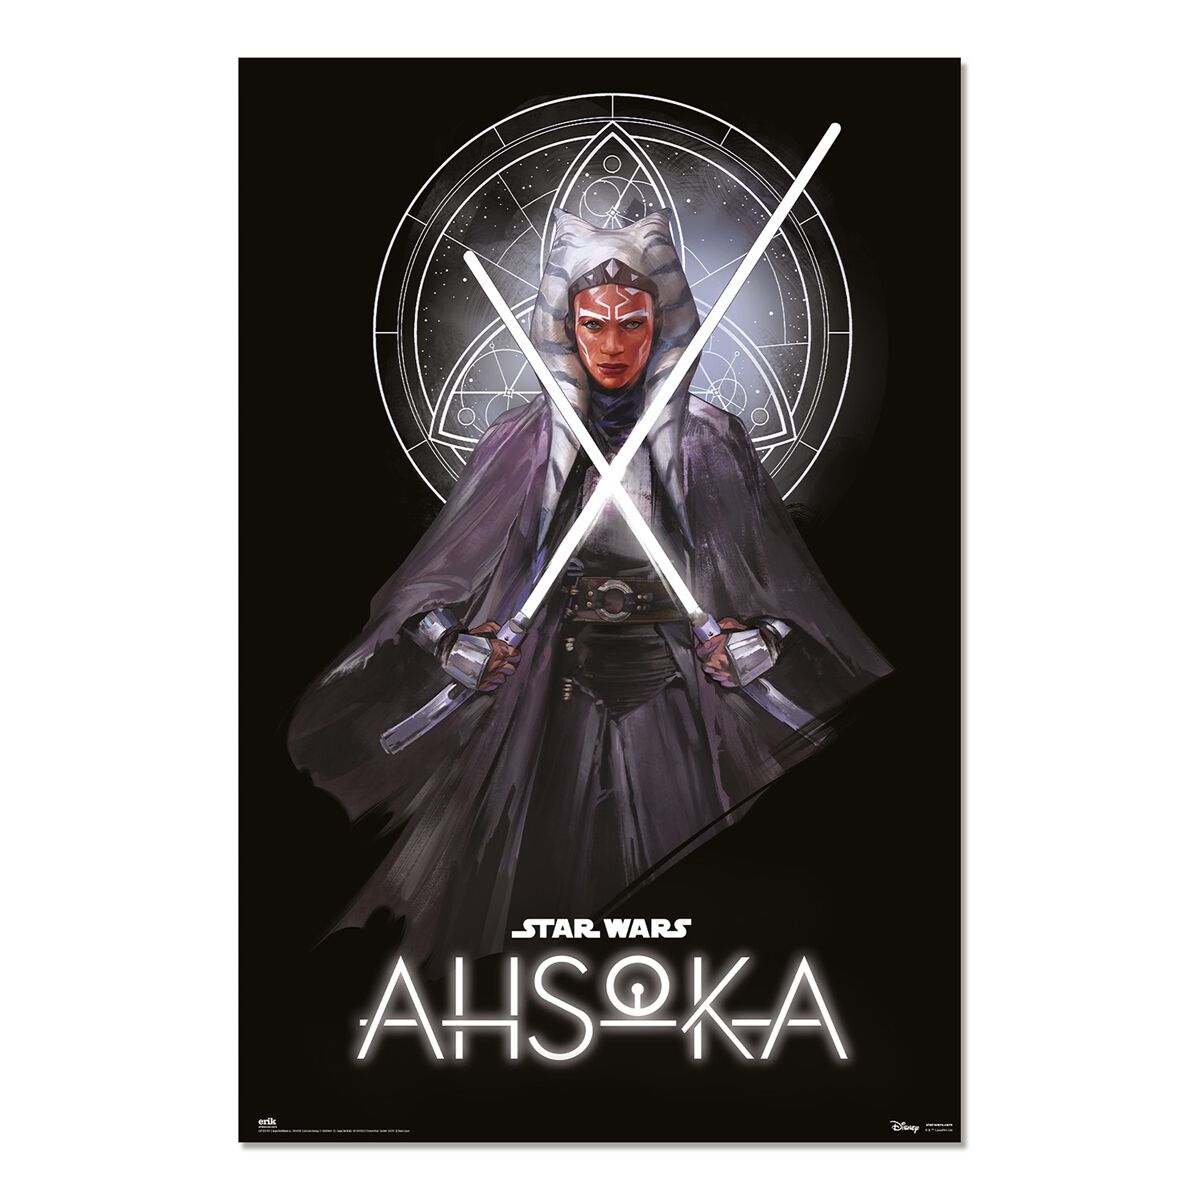 Star Wars - Ahsoka - Ahsoka Tano Lightsabers - Poster - multicolor von Star Wars